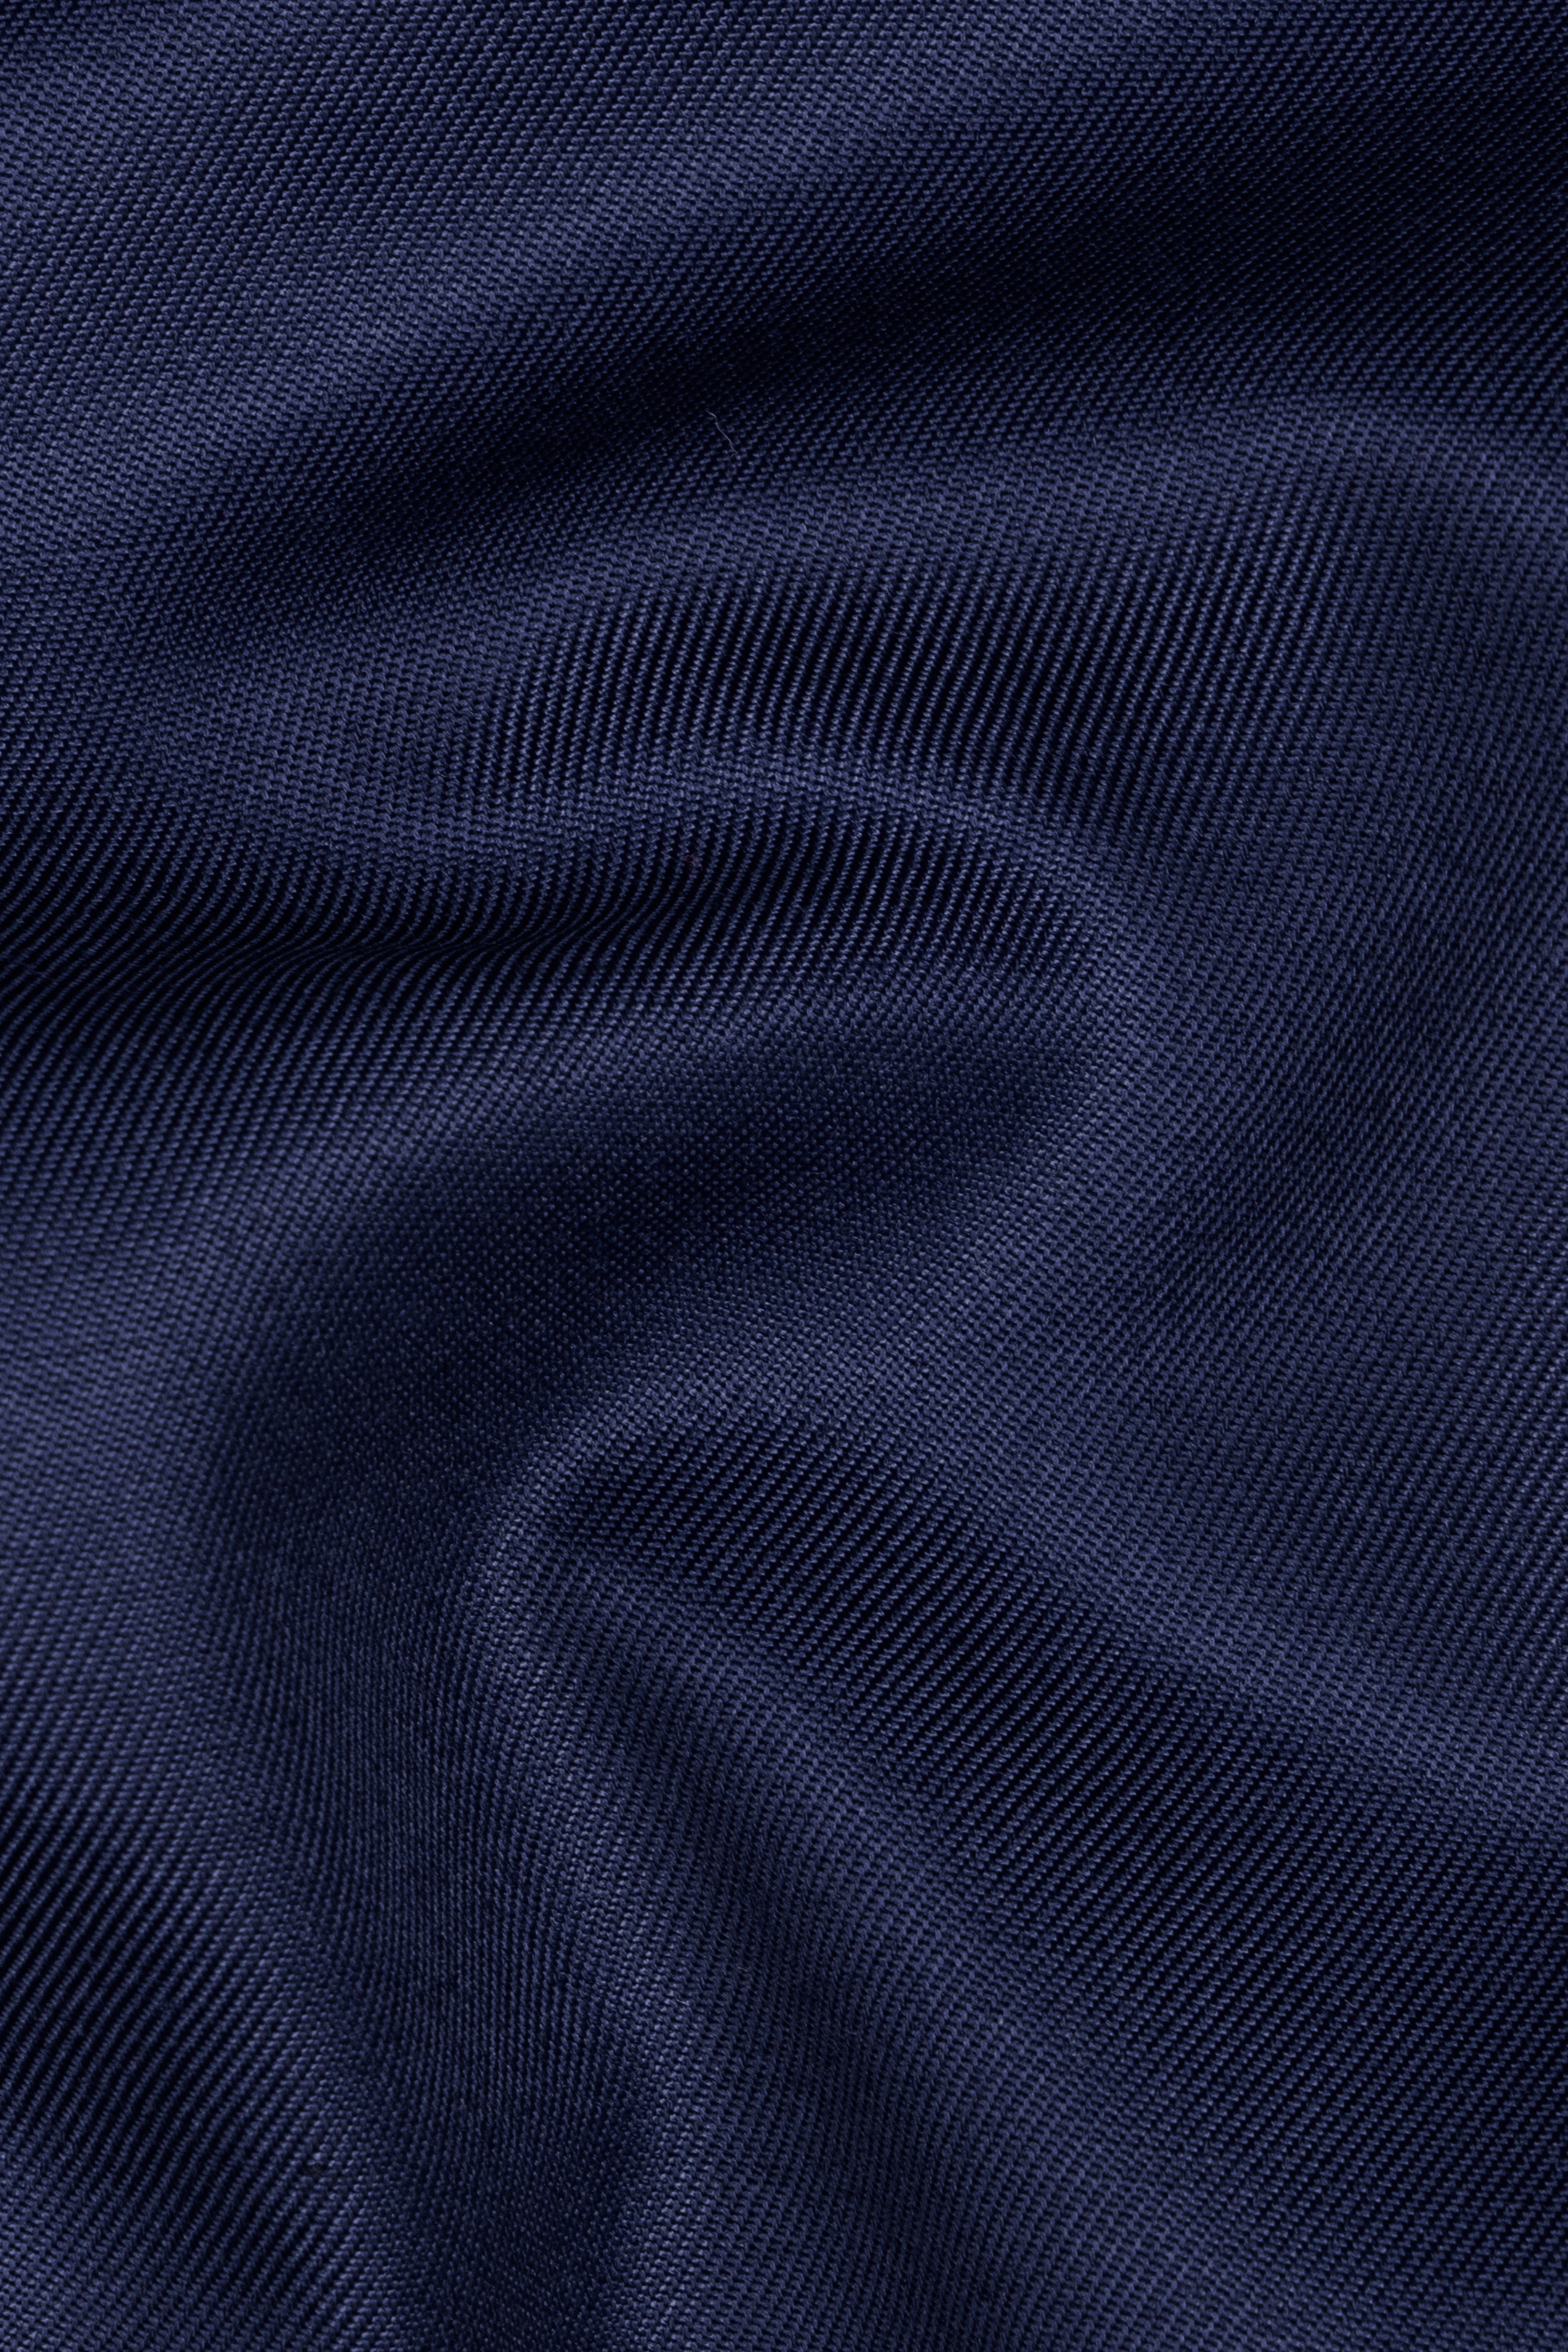 Tealish Blue Plain Solid Wool Blend Waistcoat